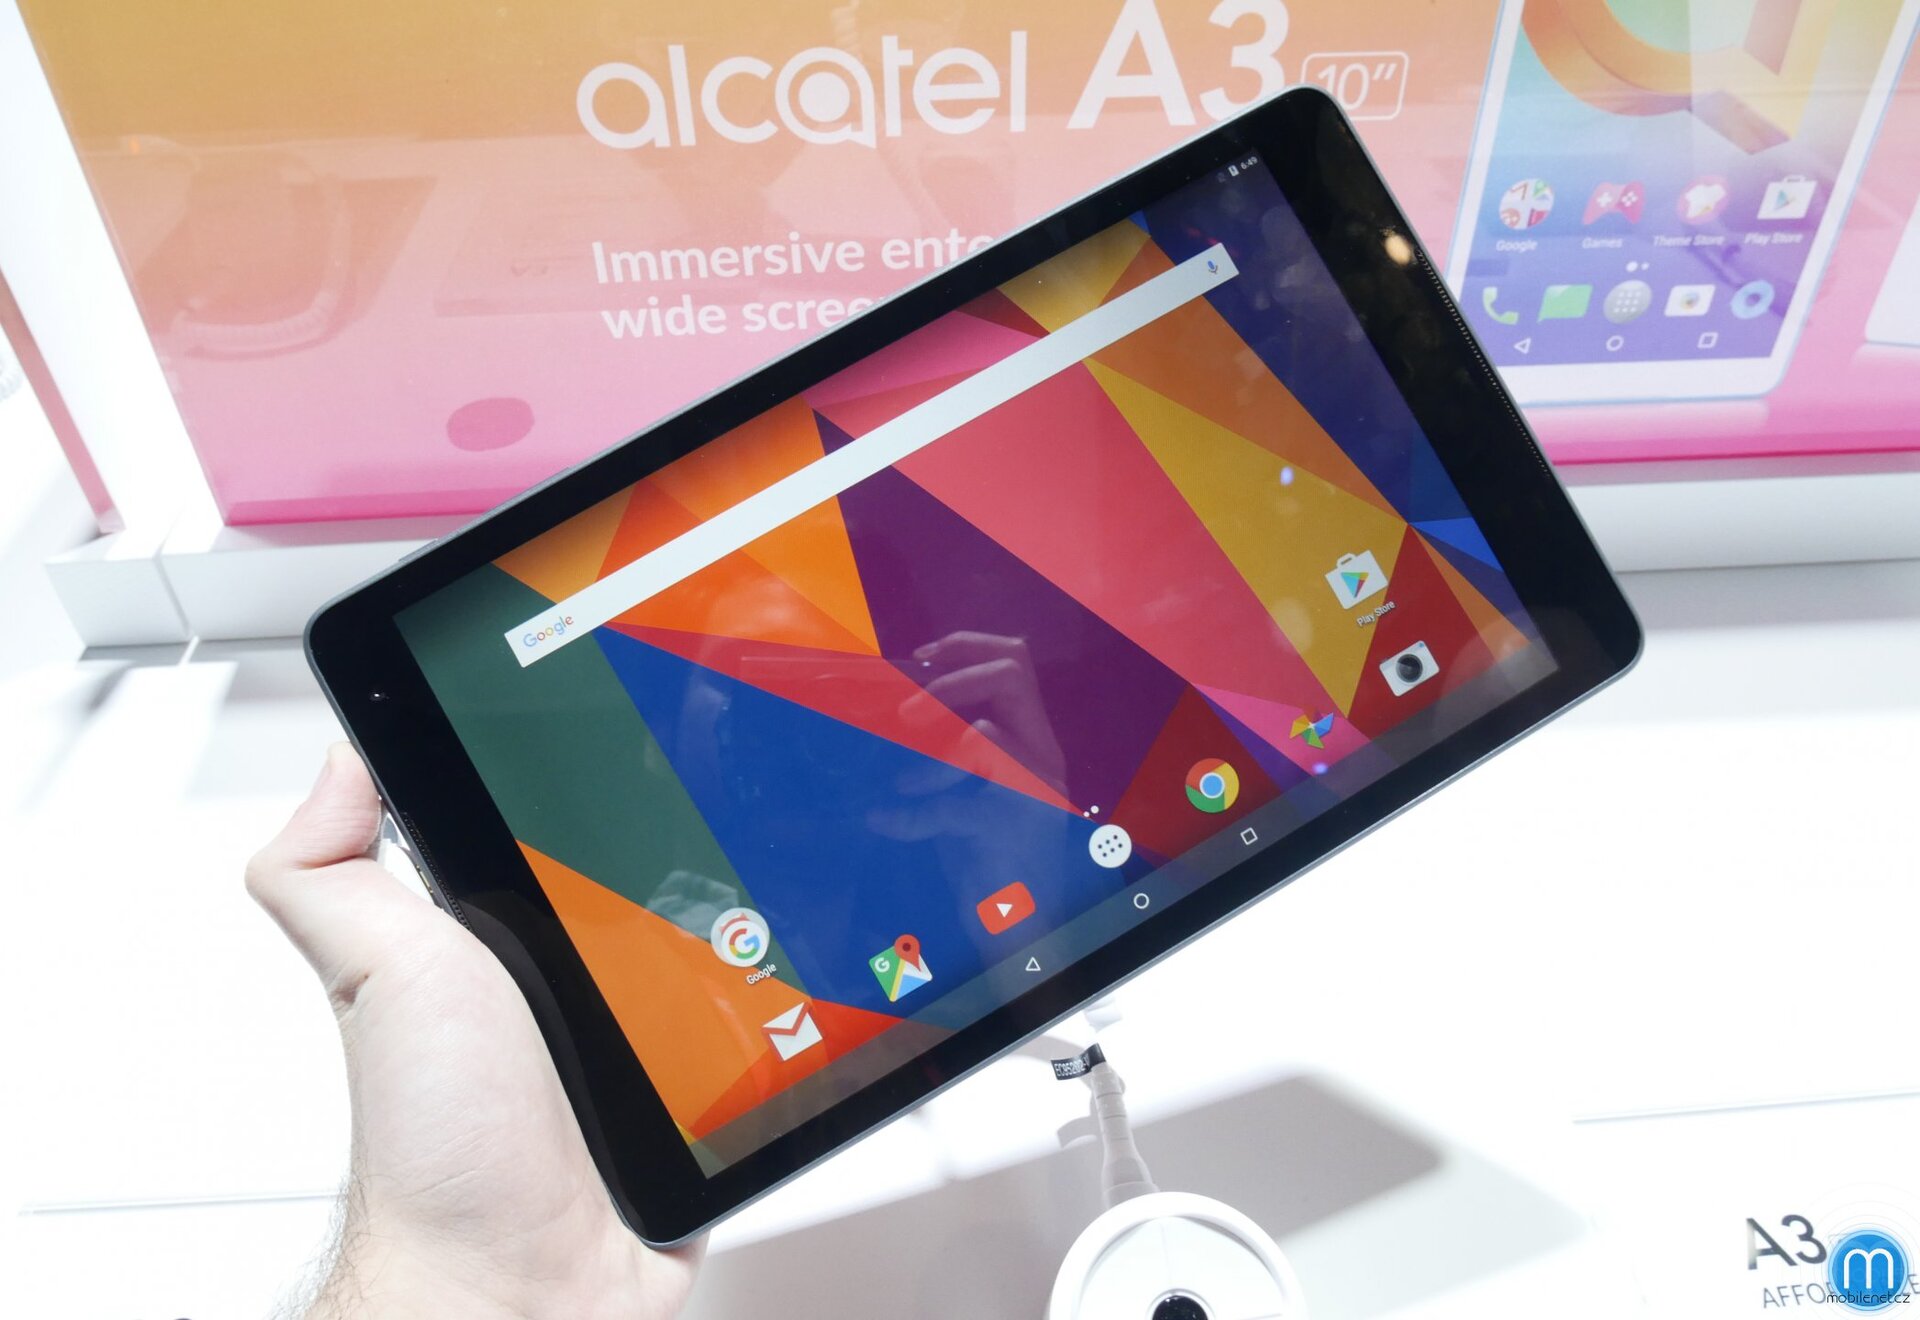 Alcatel A3 tablet